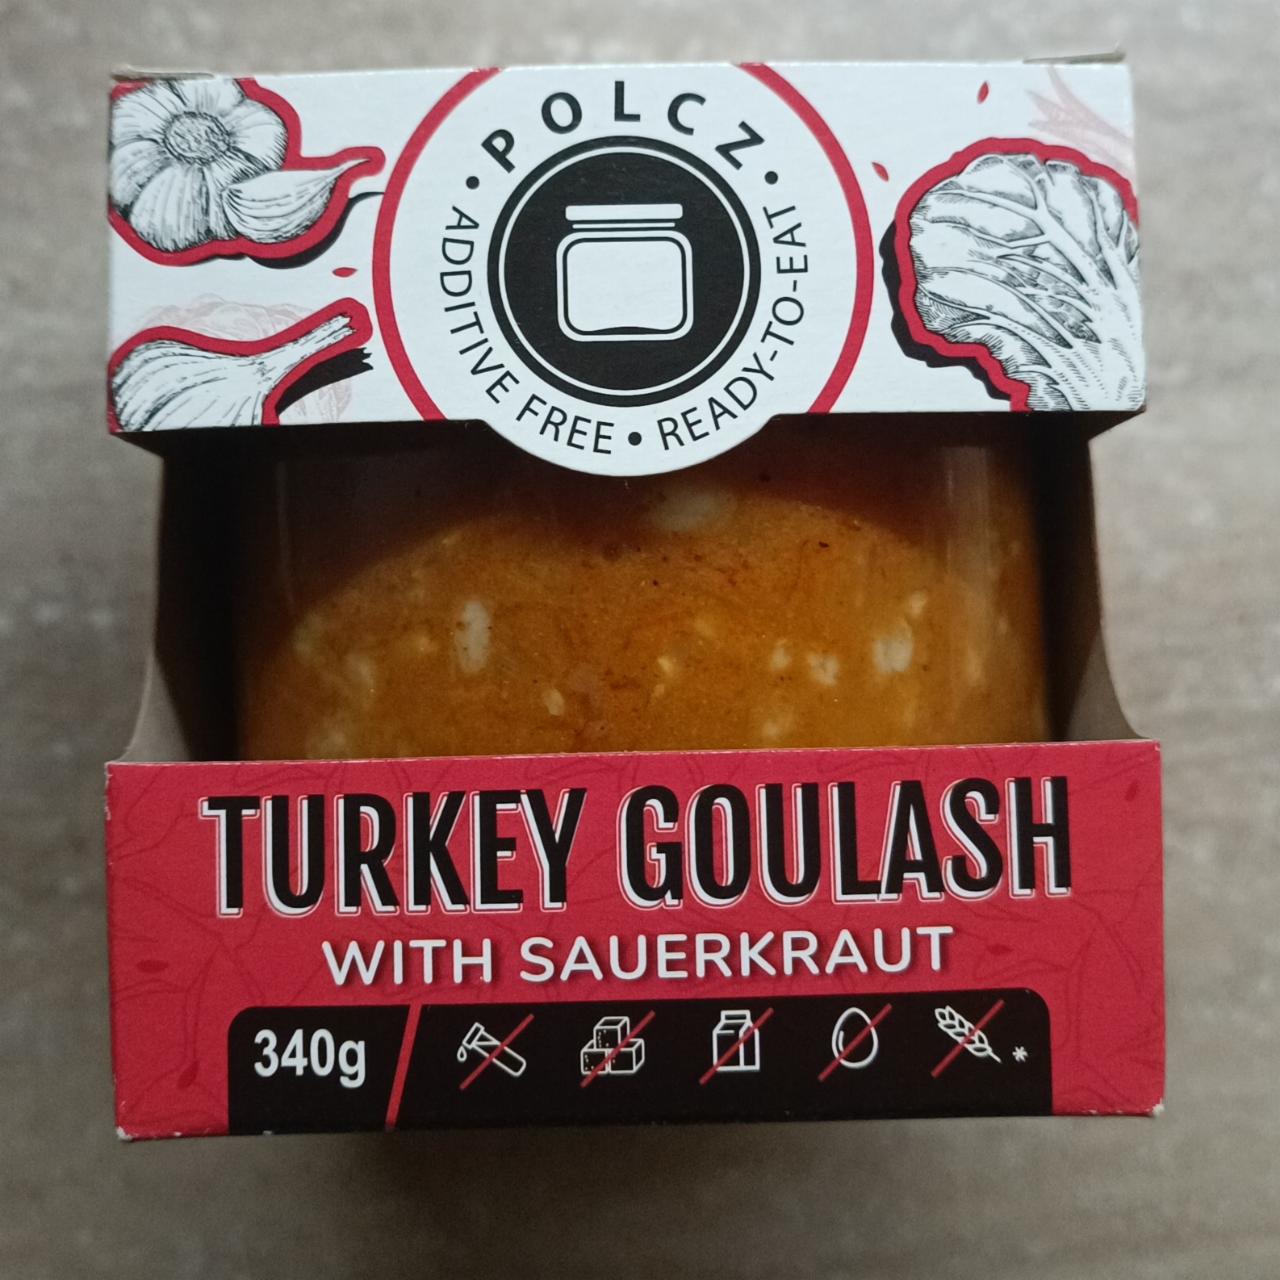 Képek - Turkey Goulash with Sauerkraut Polcz